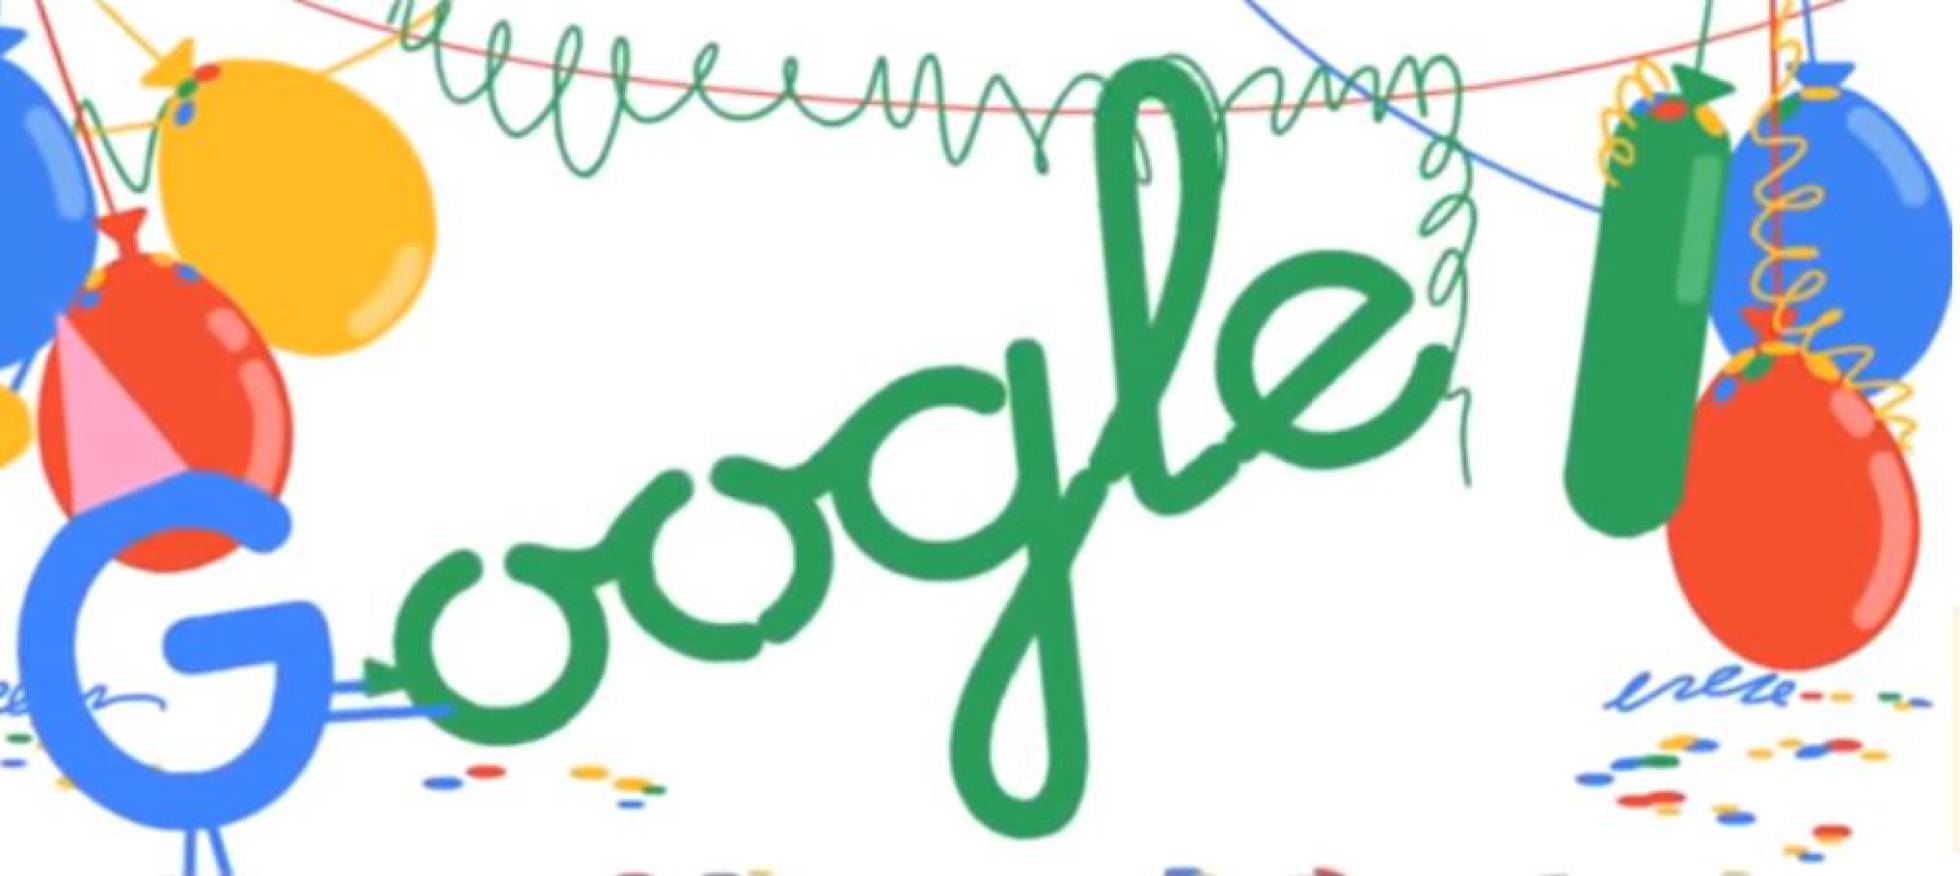 Google de Cumpleaños